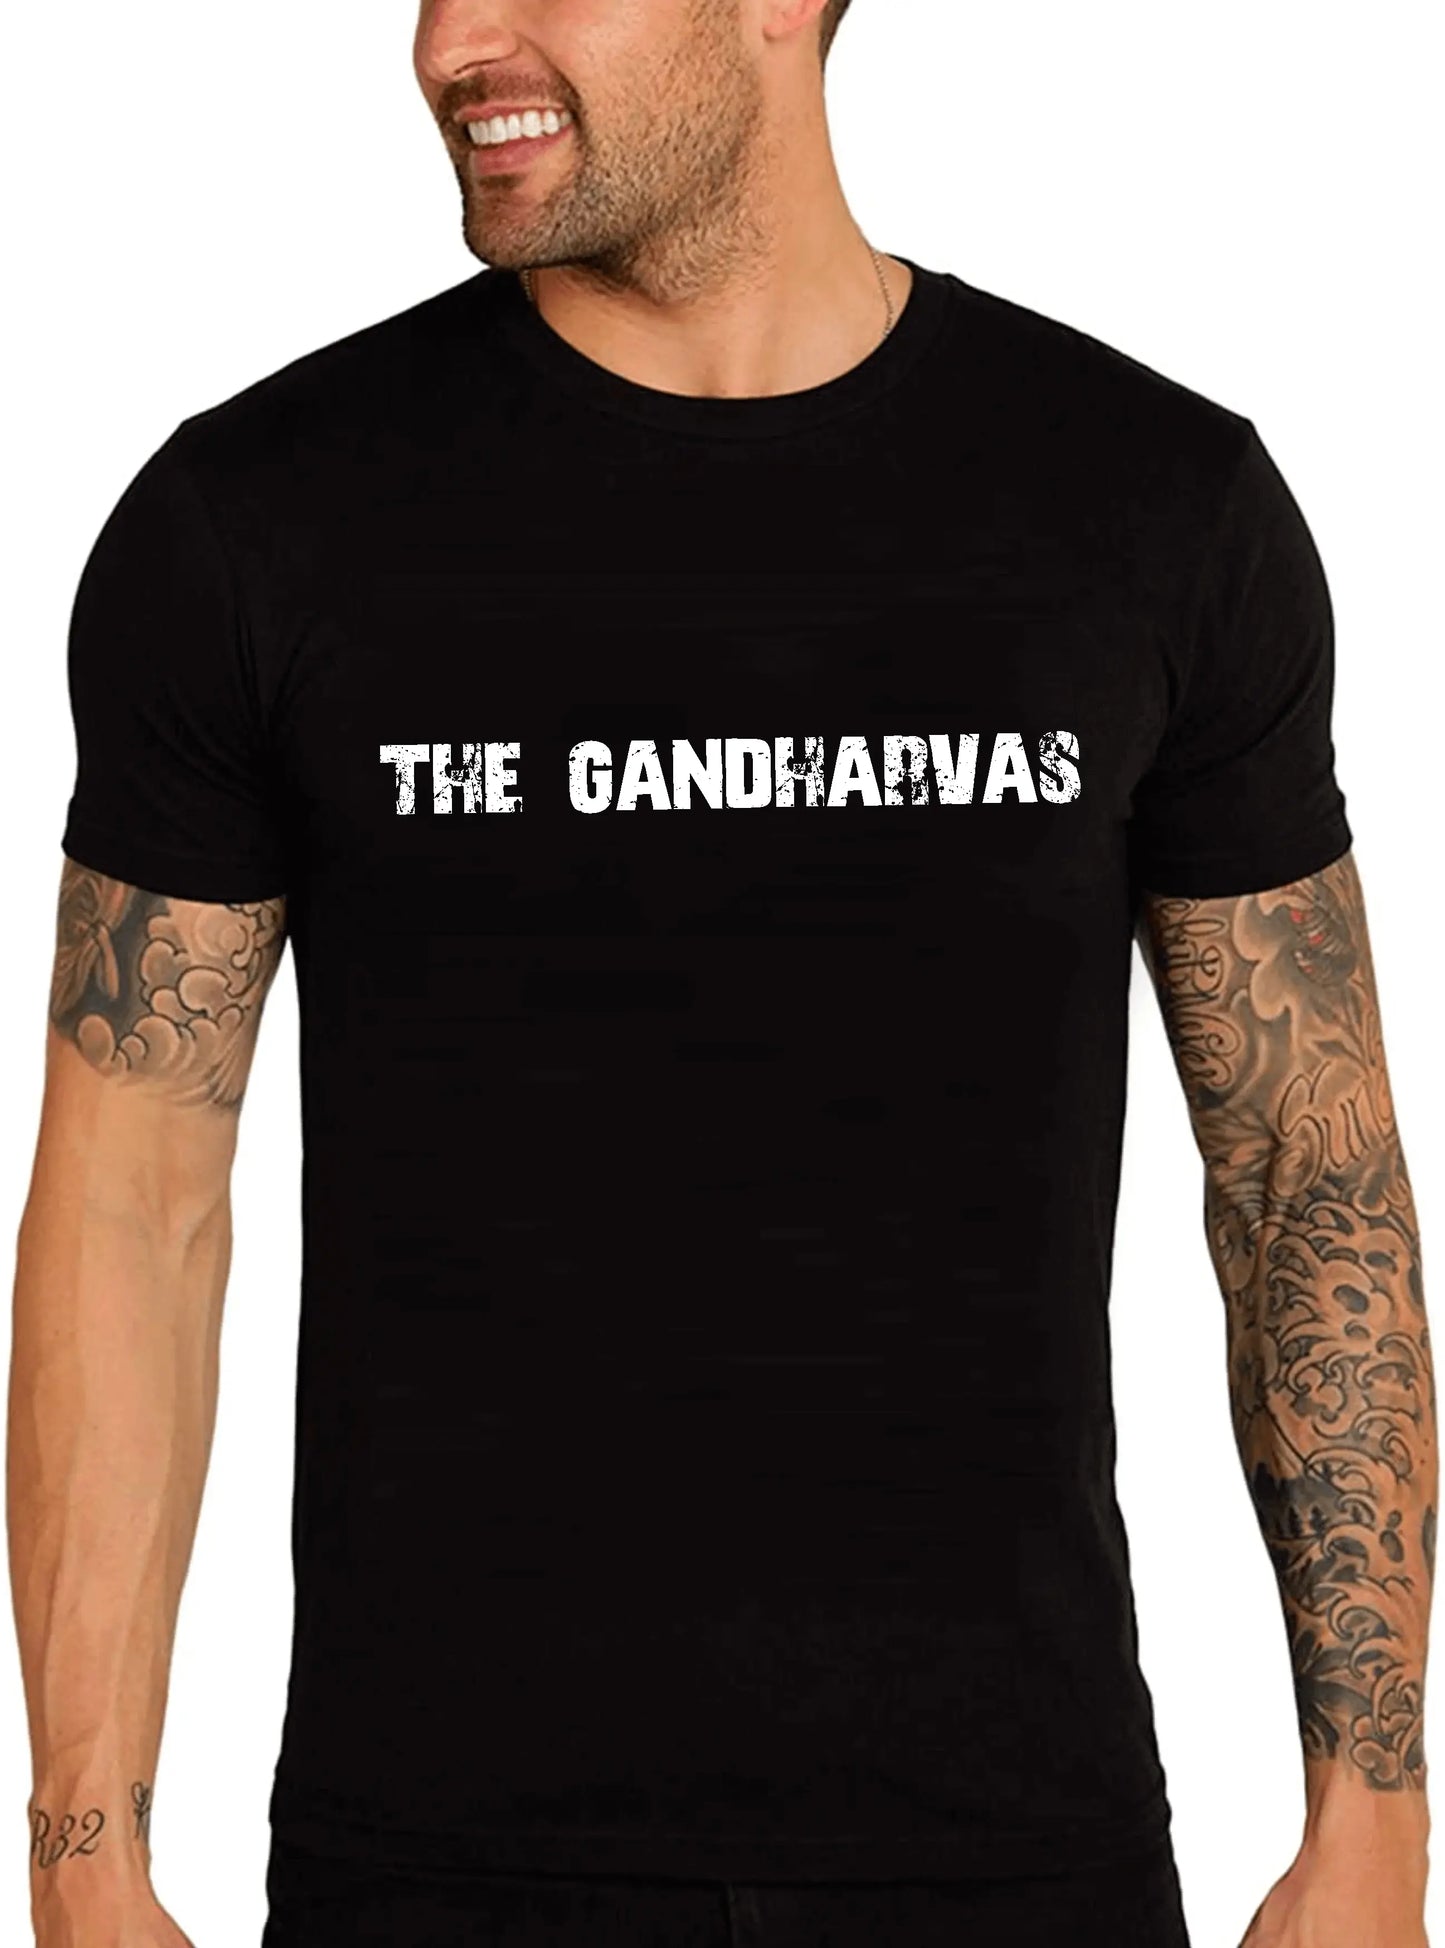 Men's Graphic T-Shirt The Gandharvas Eco-Friendly Limited Edition Short Sleeve Tee-Shirt Vintage Birthday Gift Novelty